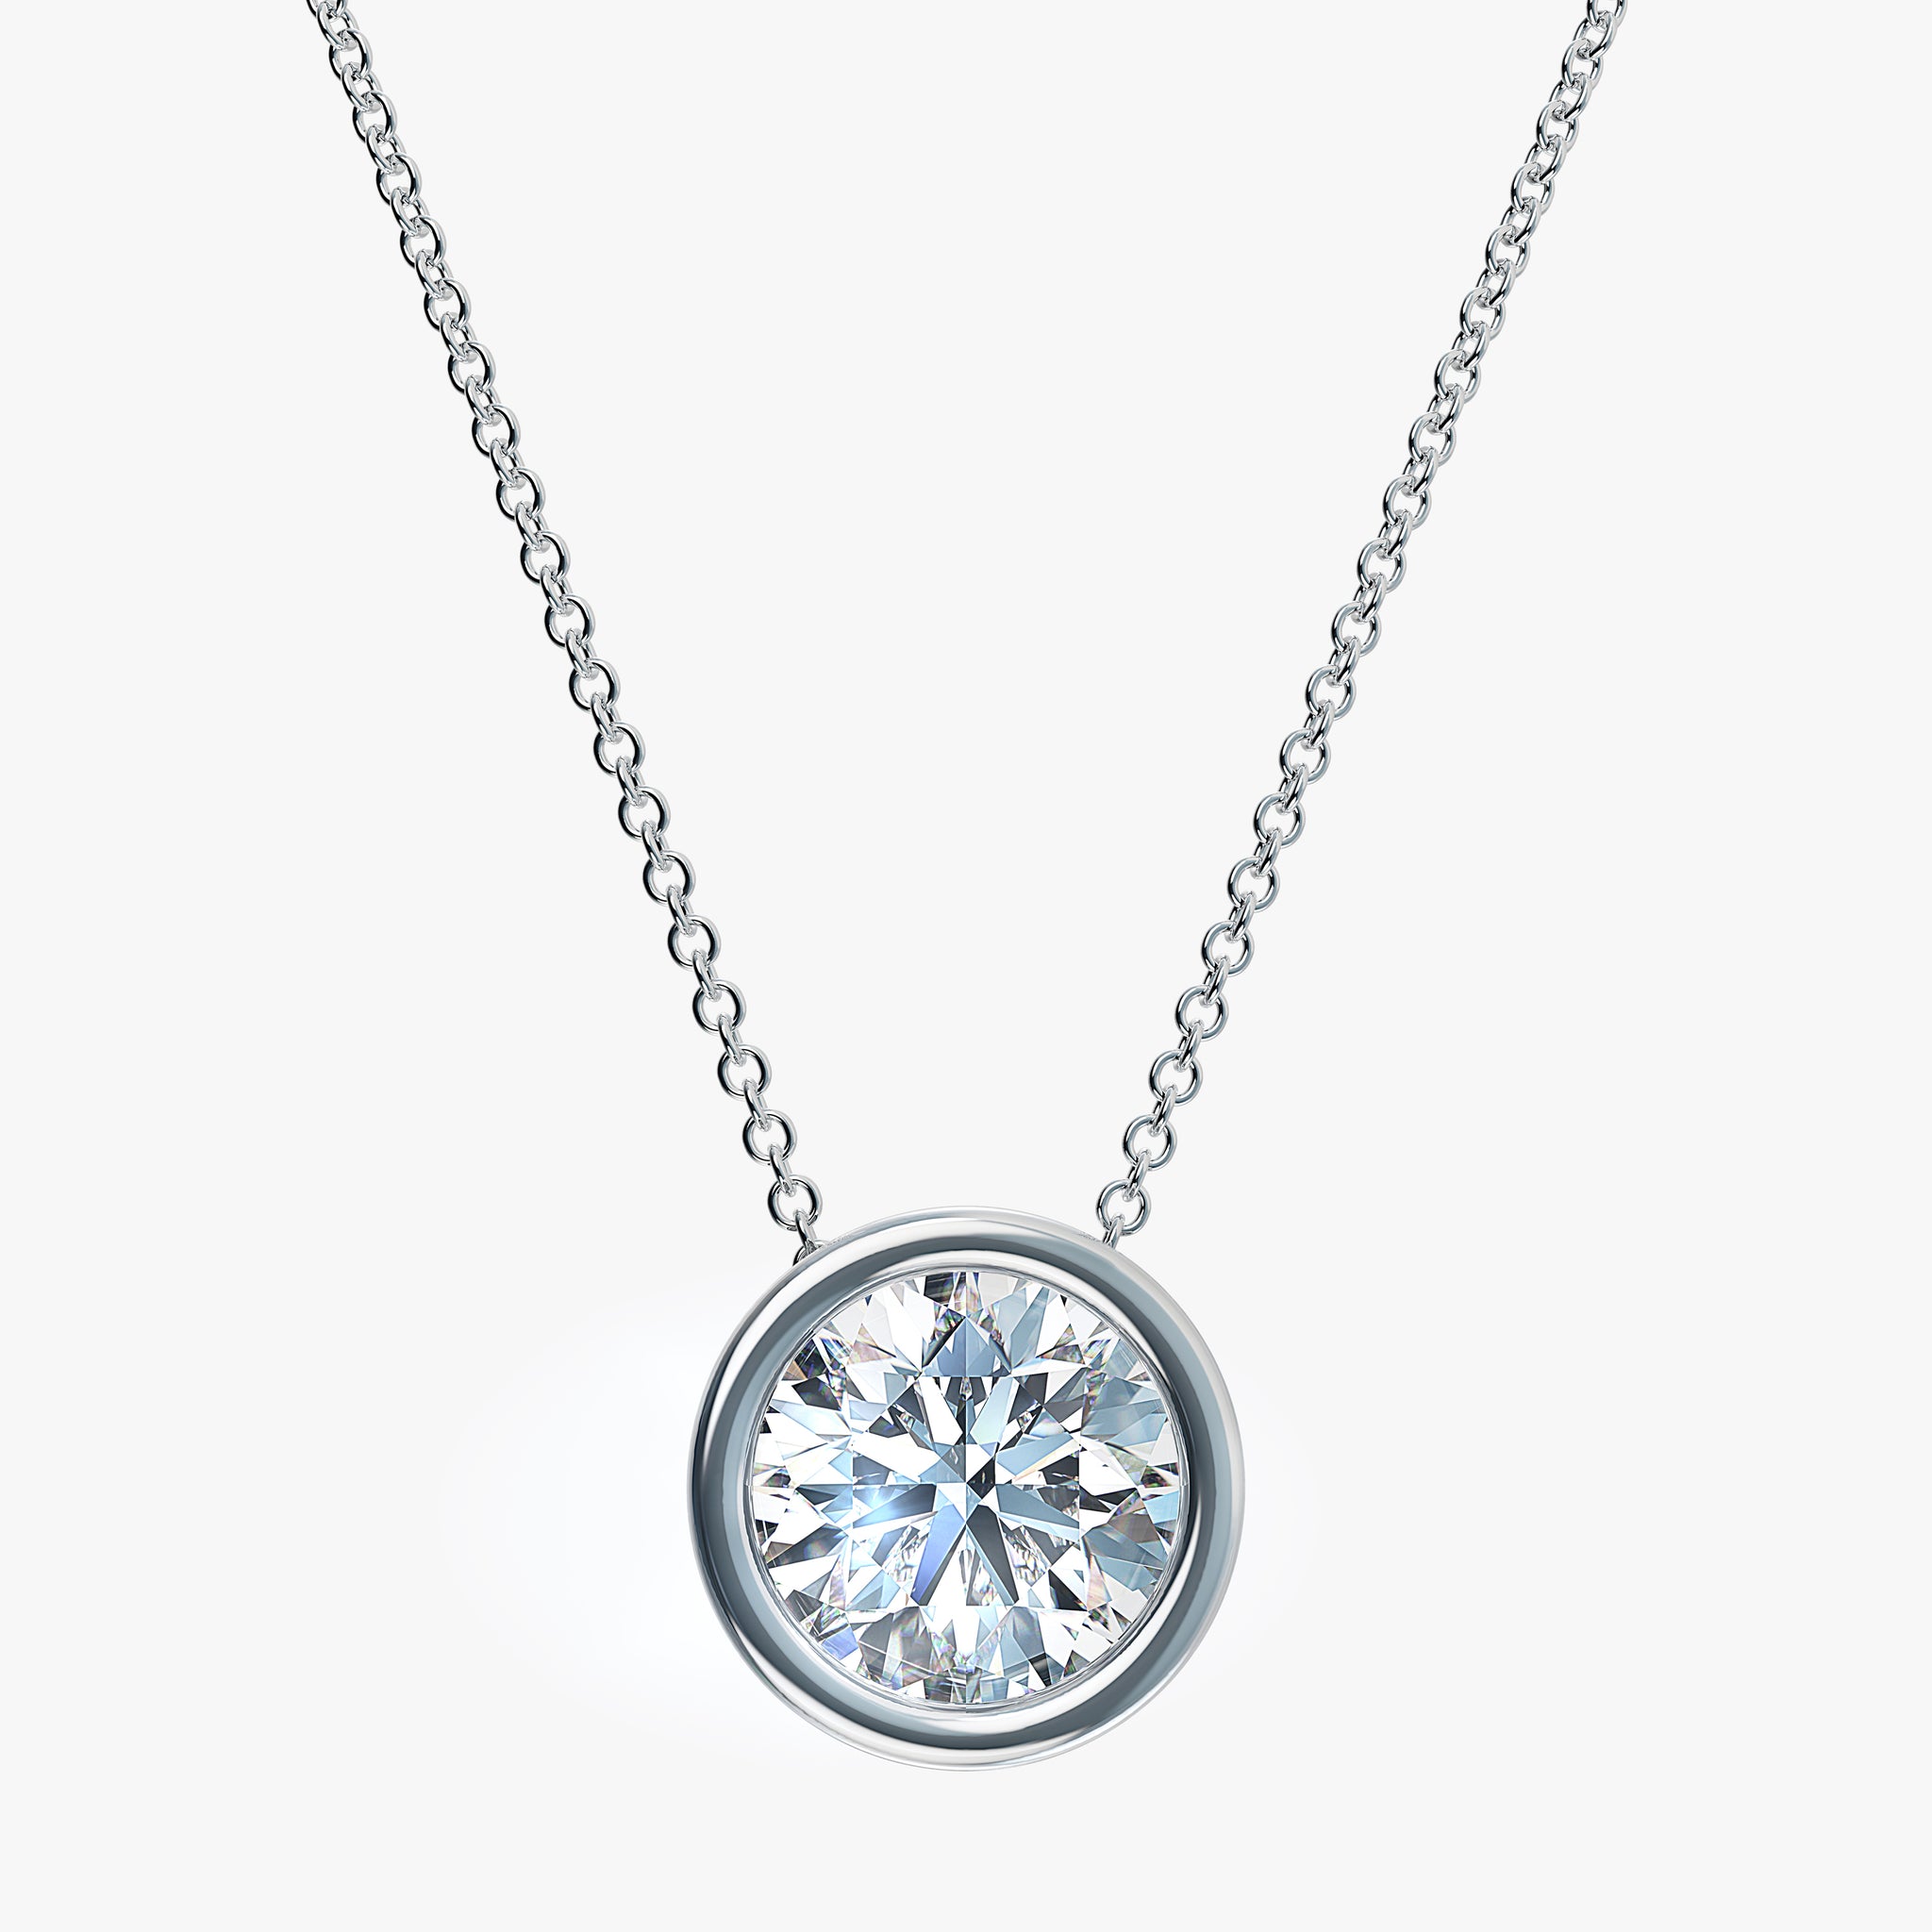 J'EVAR 14KT White Gold Solitaire Diamond Necklace ALTR Lab Grown Bezel Solitaire Diamond Necklace Front View